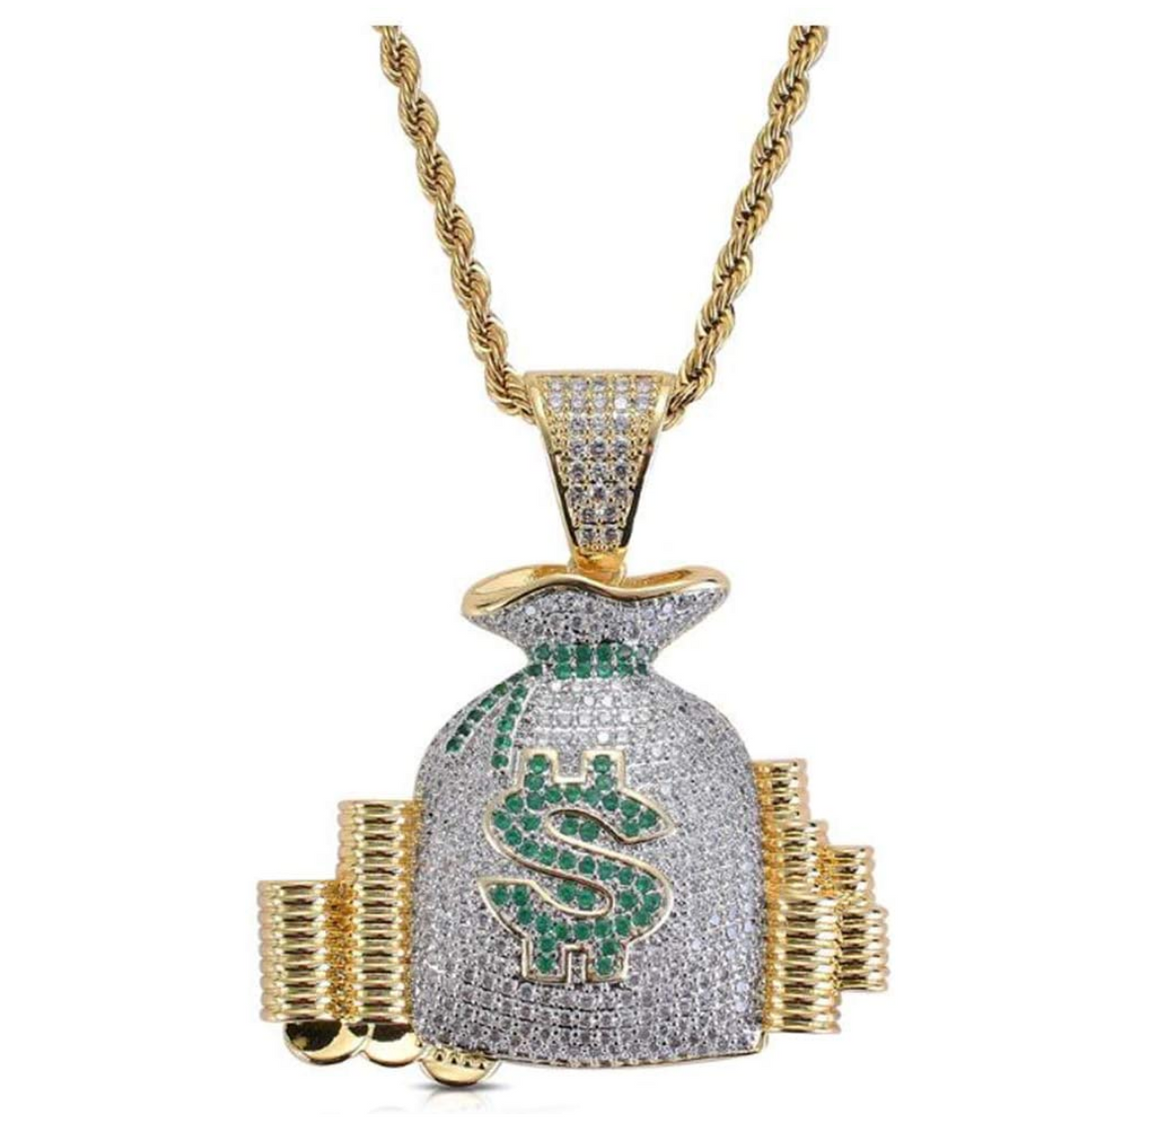 Cash Money Bag Pendant Rapper Money Necklace Cartoon Simulated Diamond ...